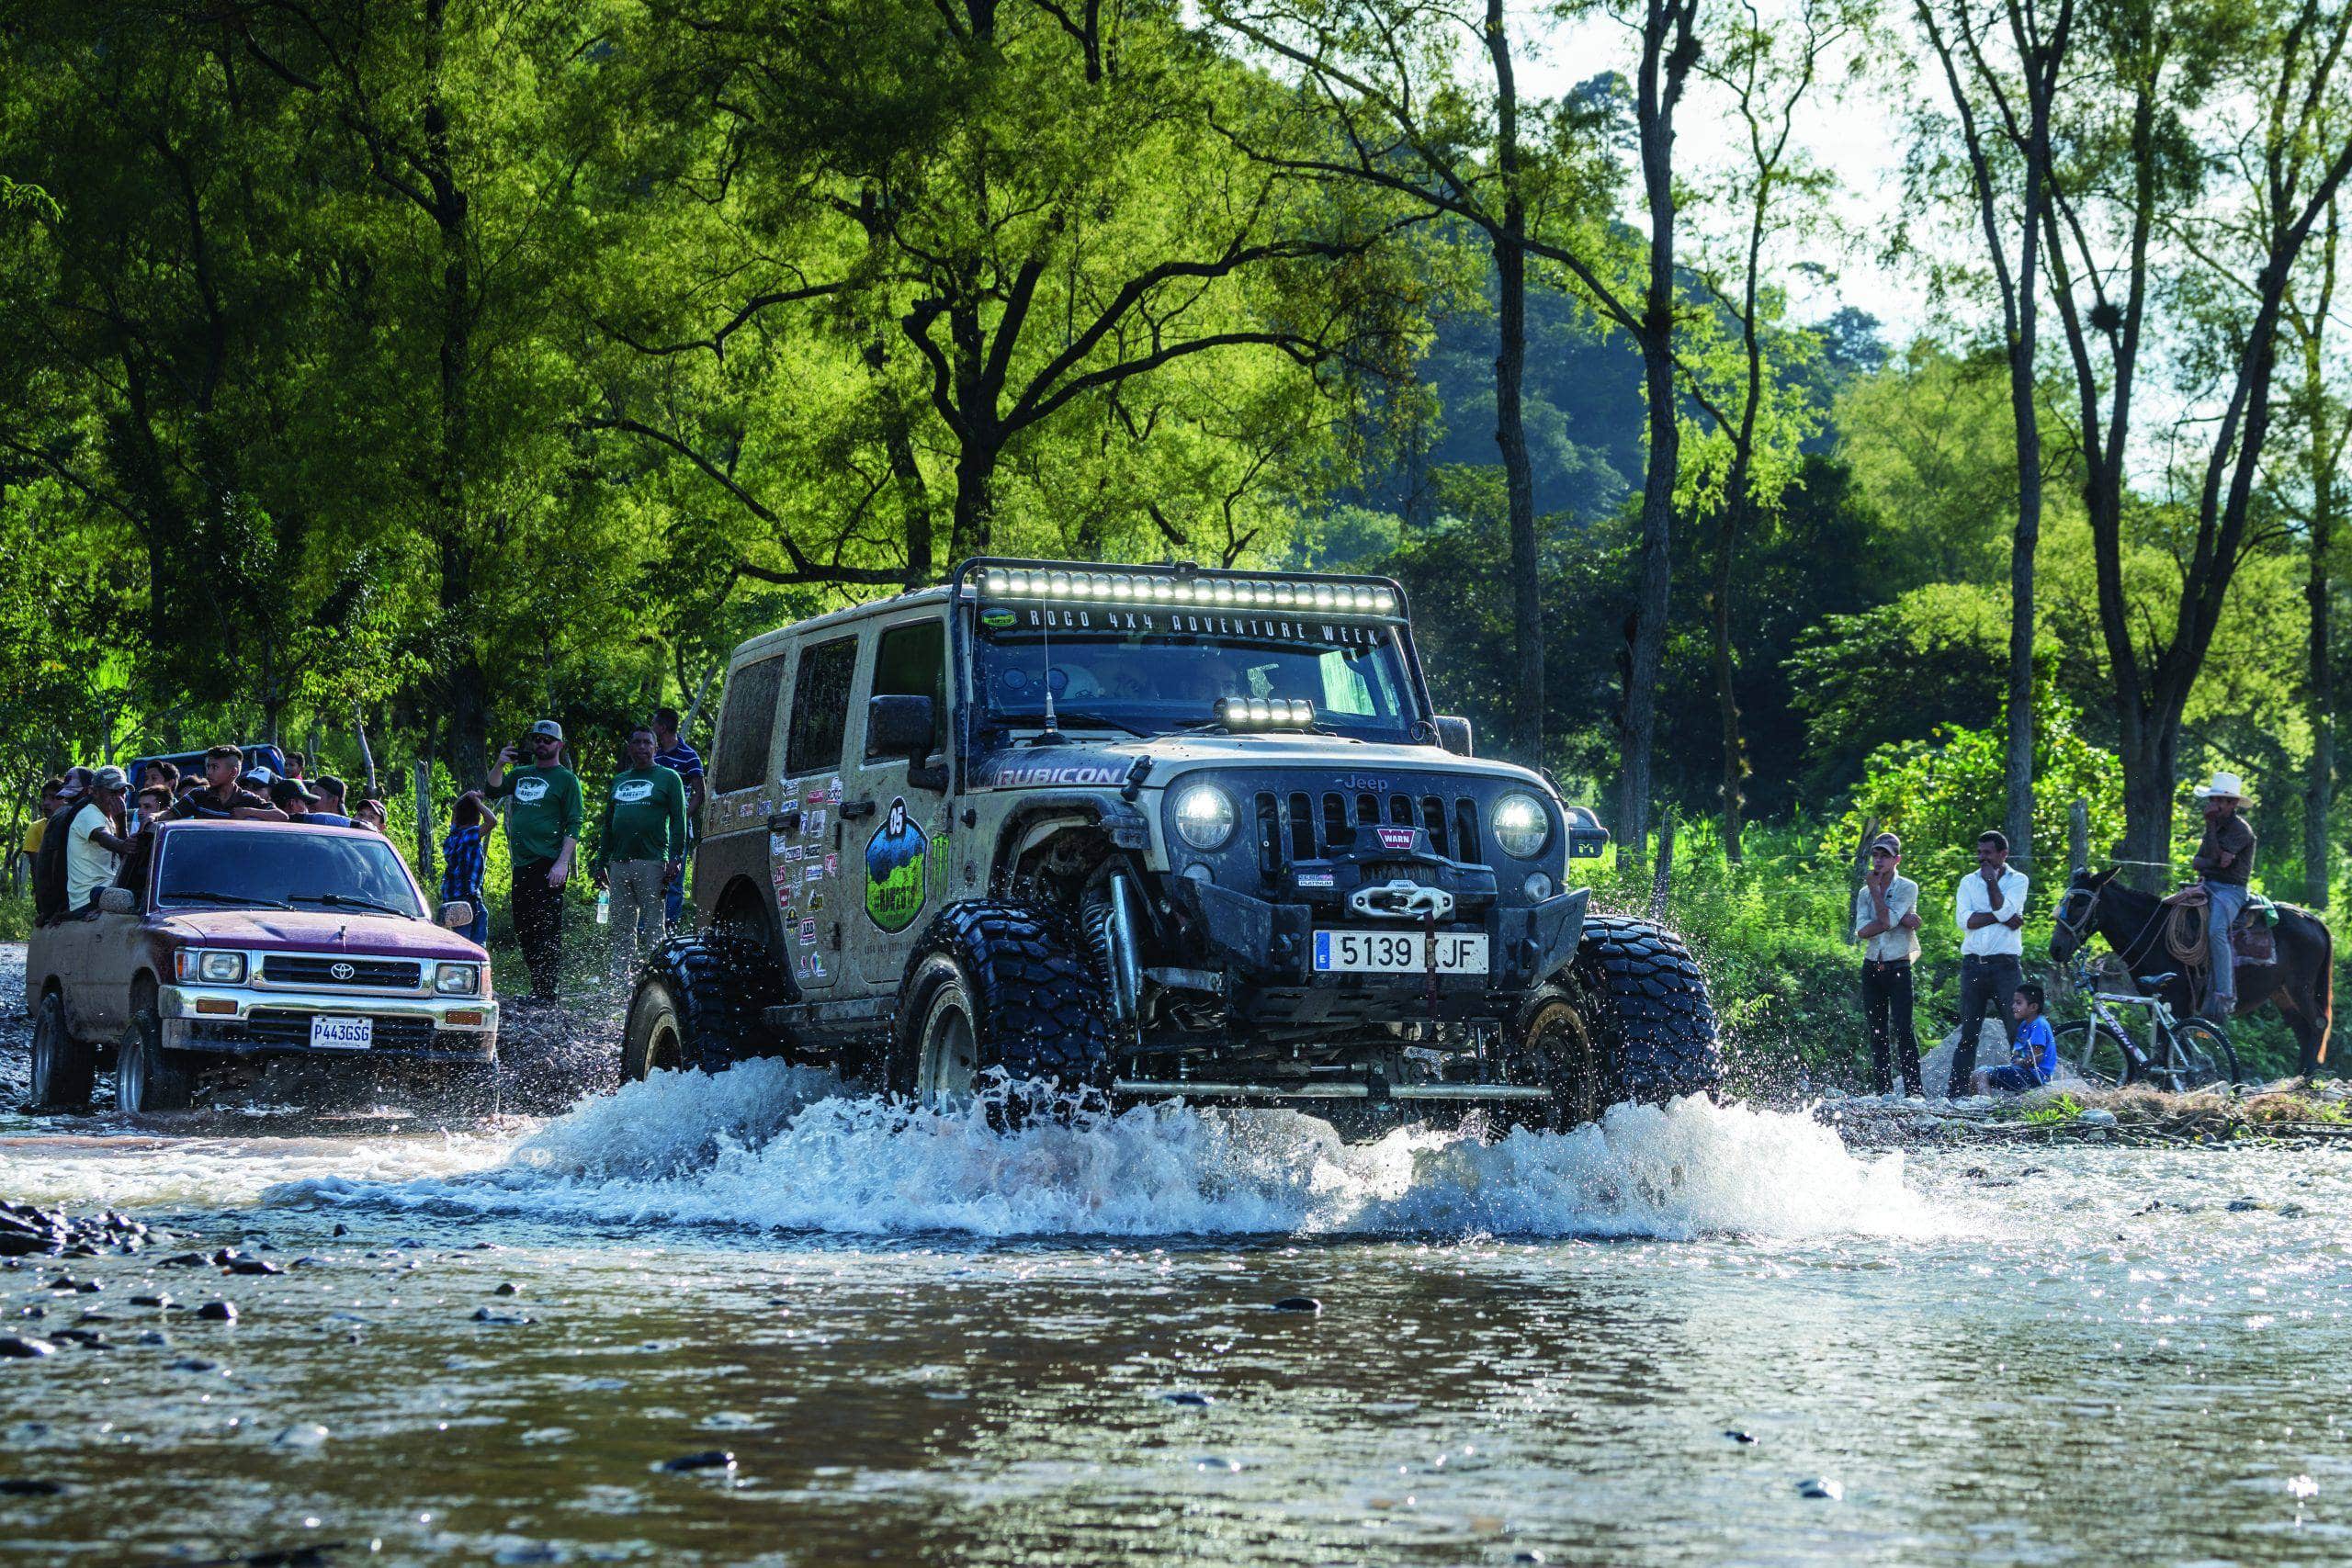 This Jeep Rubicon makes a splash